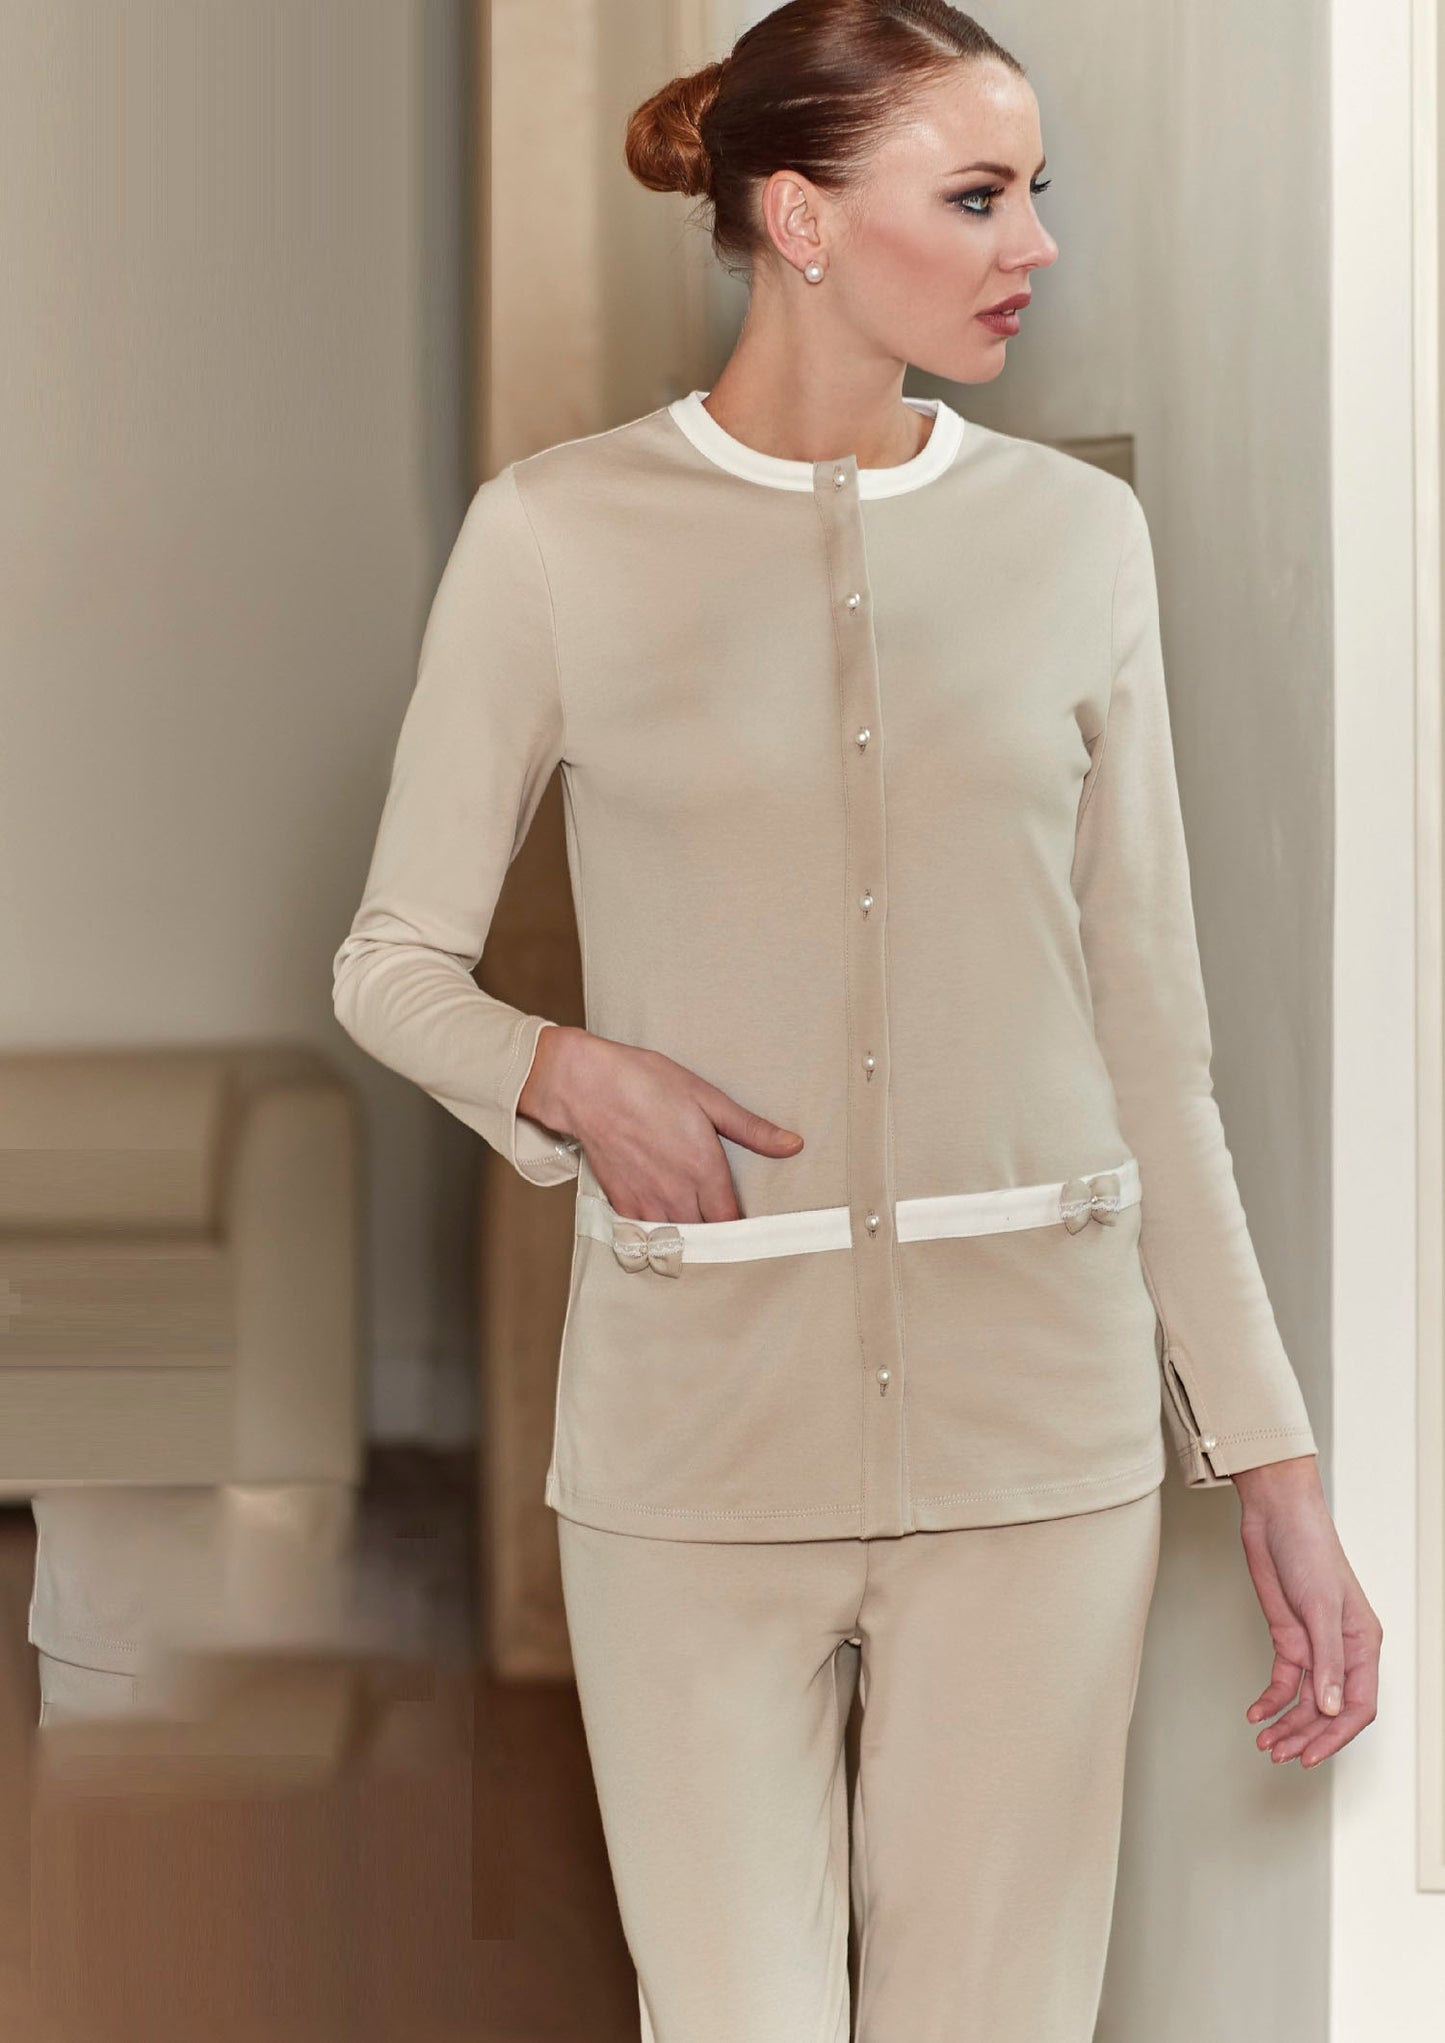 Luxury long sleeve & pants cotton pajamas set by DiBen Llingerie from Italy